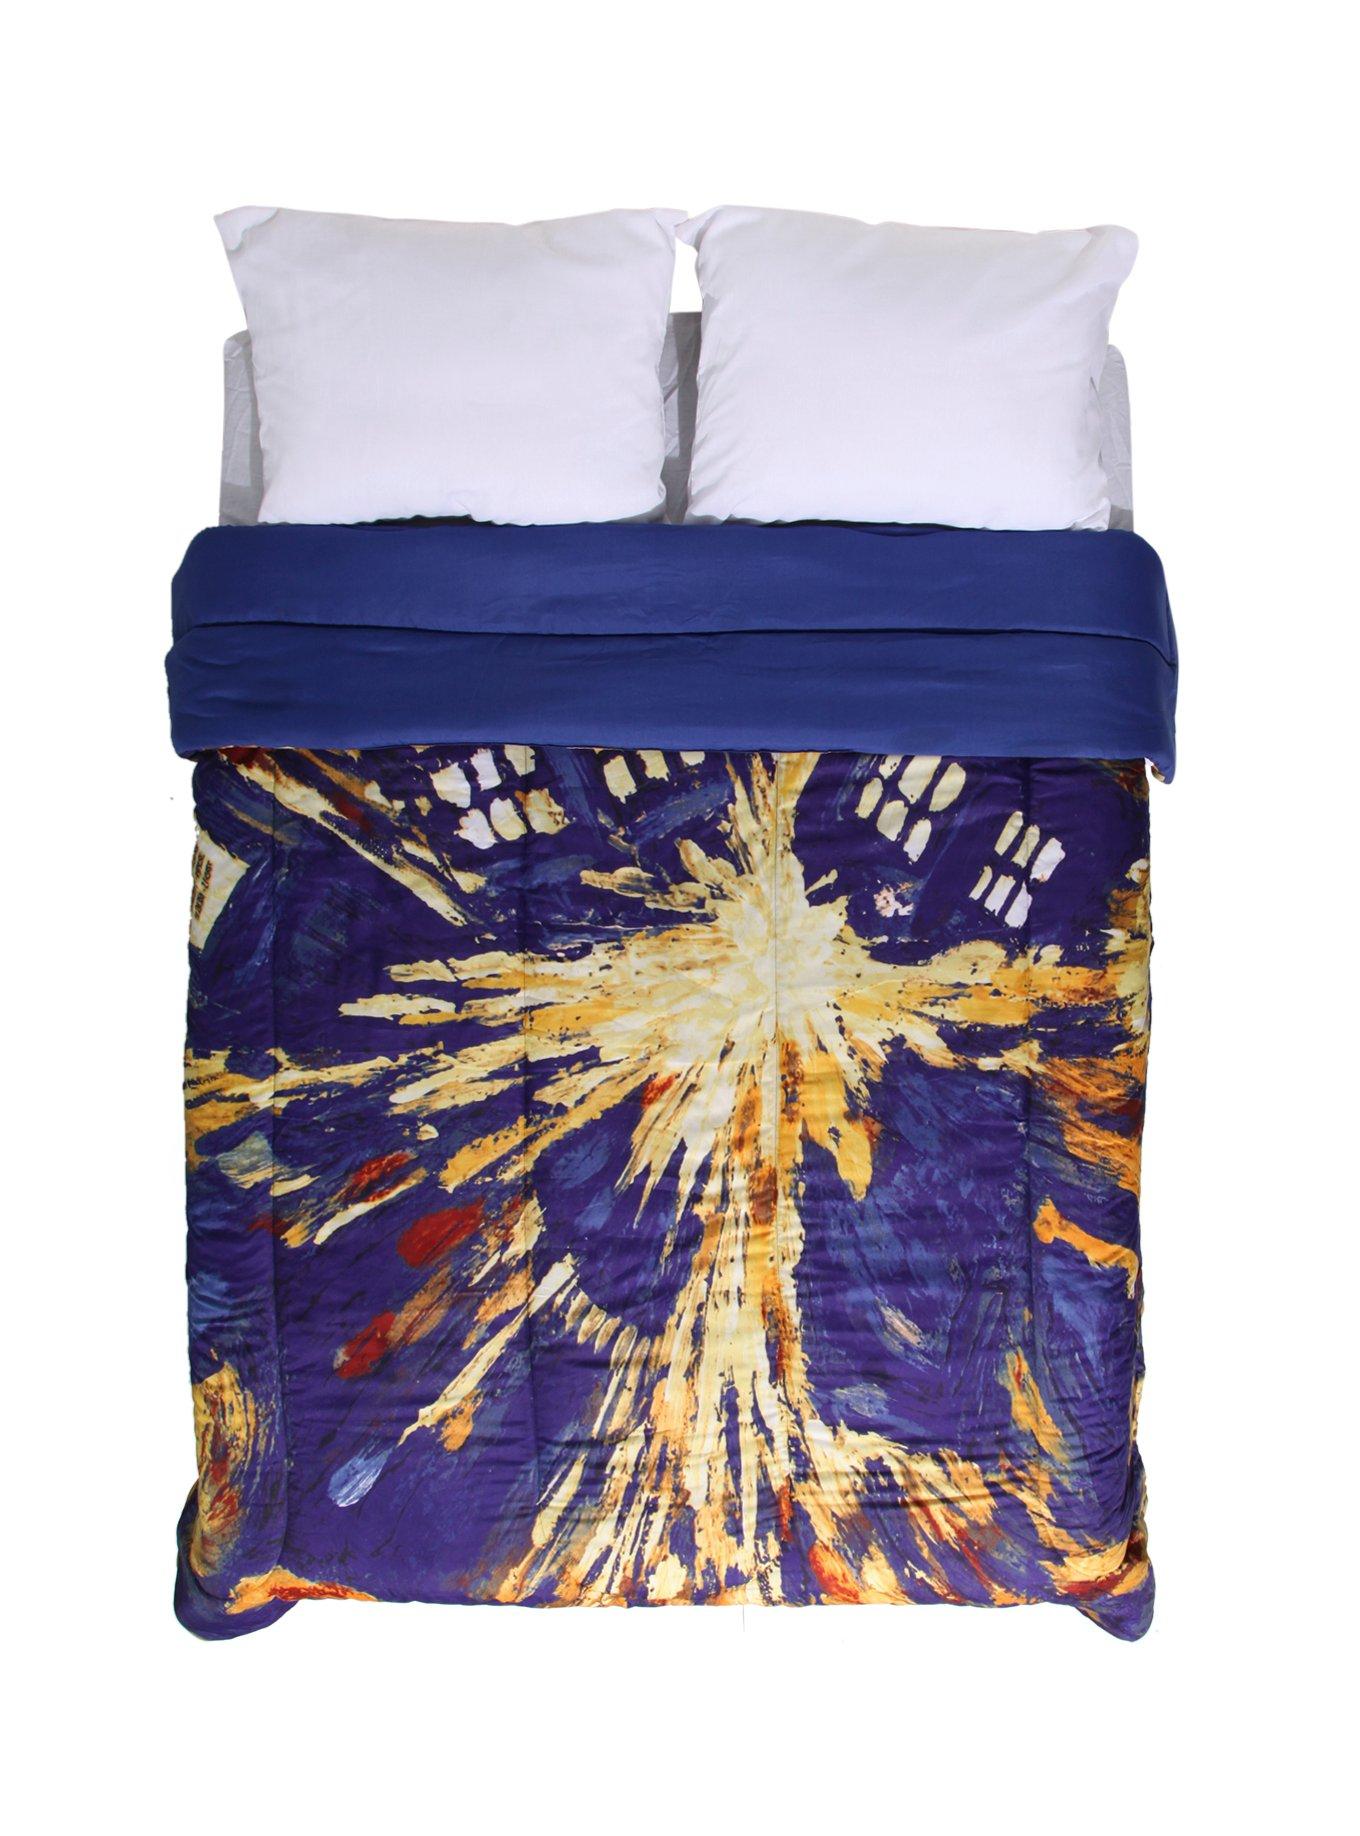 Doctor Who Exploding TARDIS Queen Comforter | Hot Topic